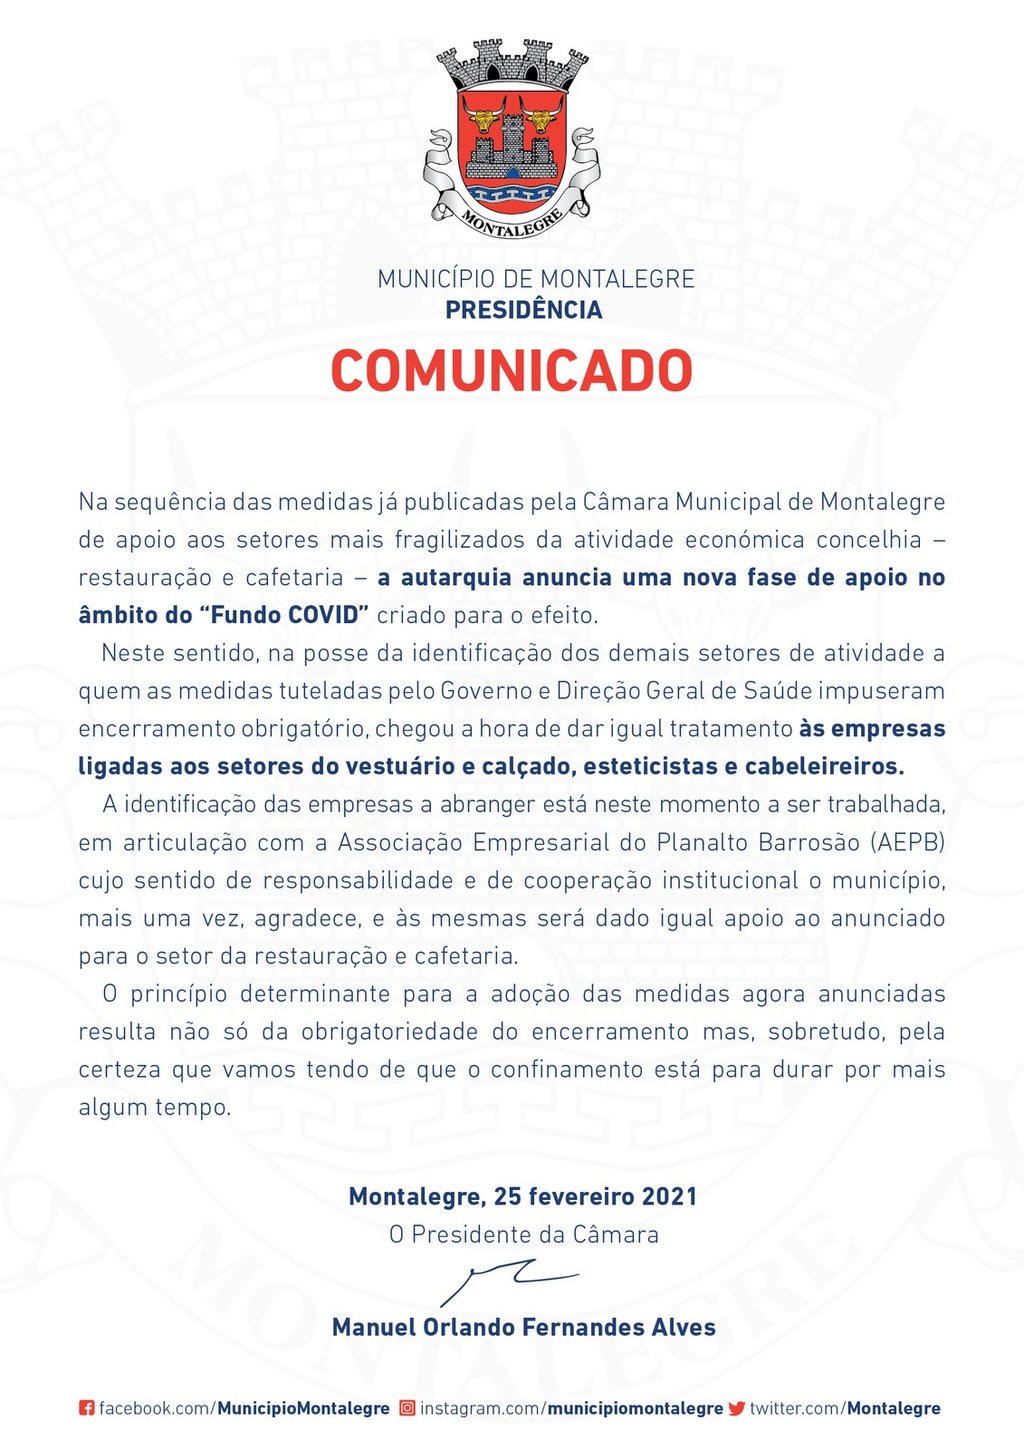 Municipio de montalegre   presidencia   comunicado  25 fevereiro 2021  1 1024 2500